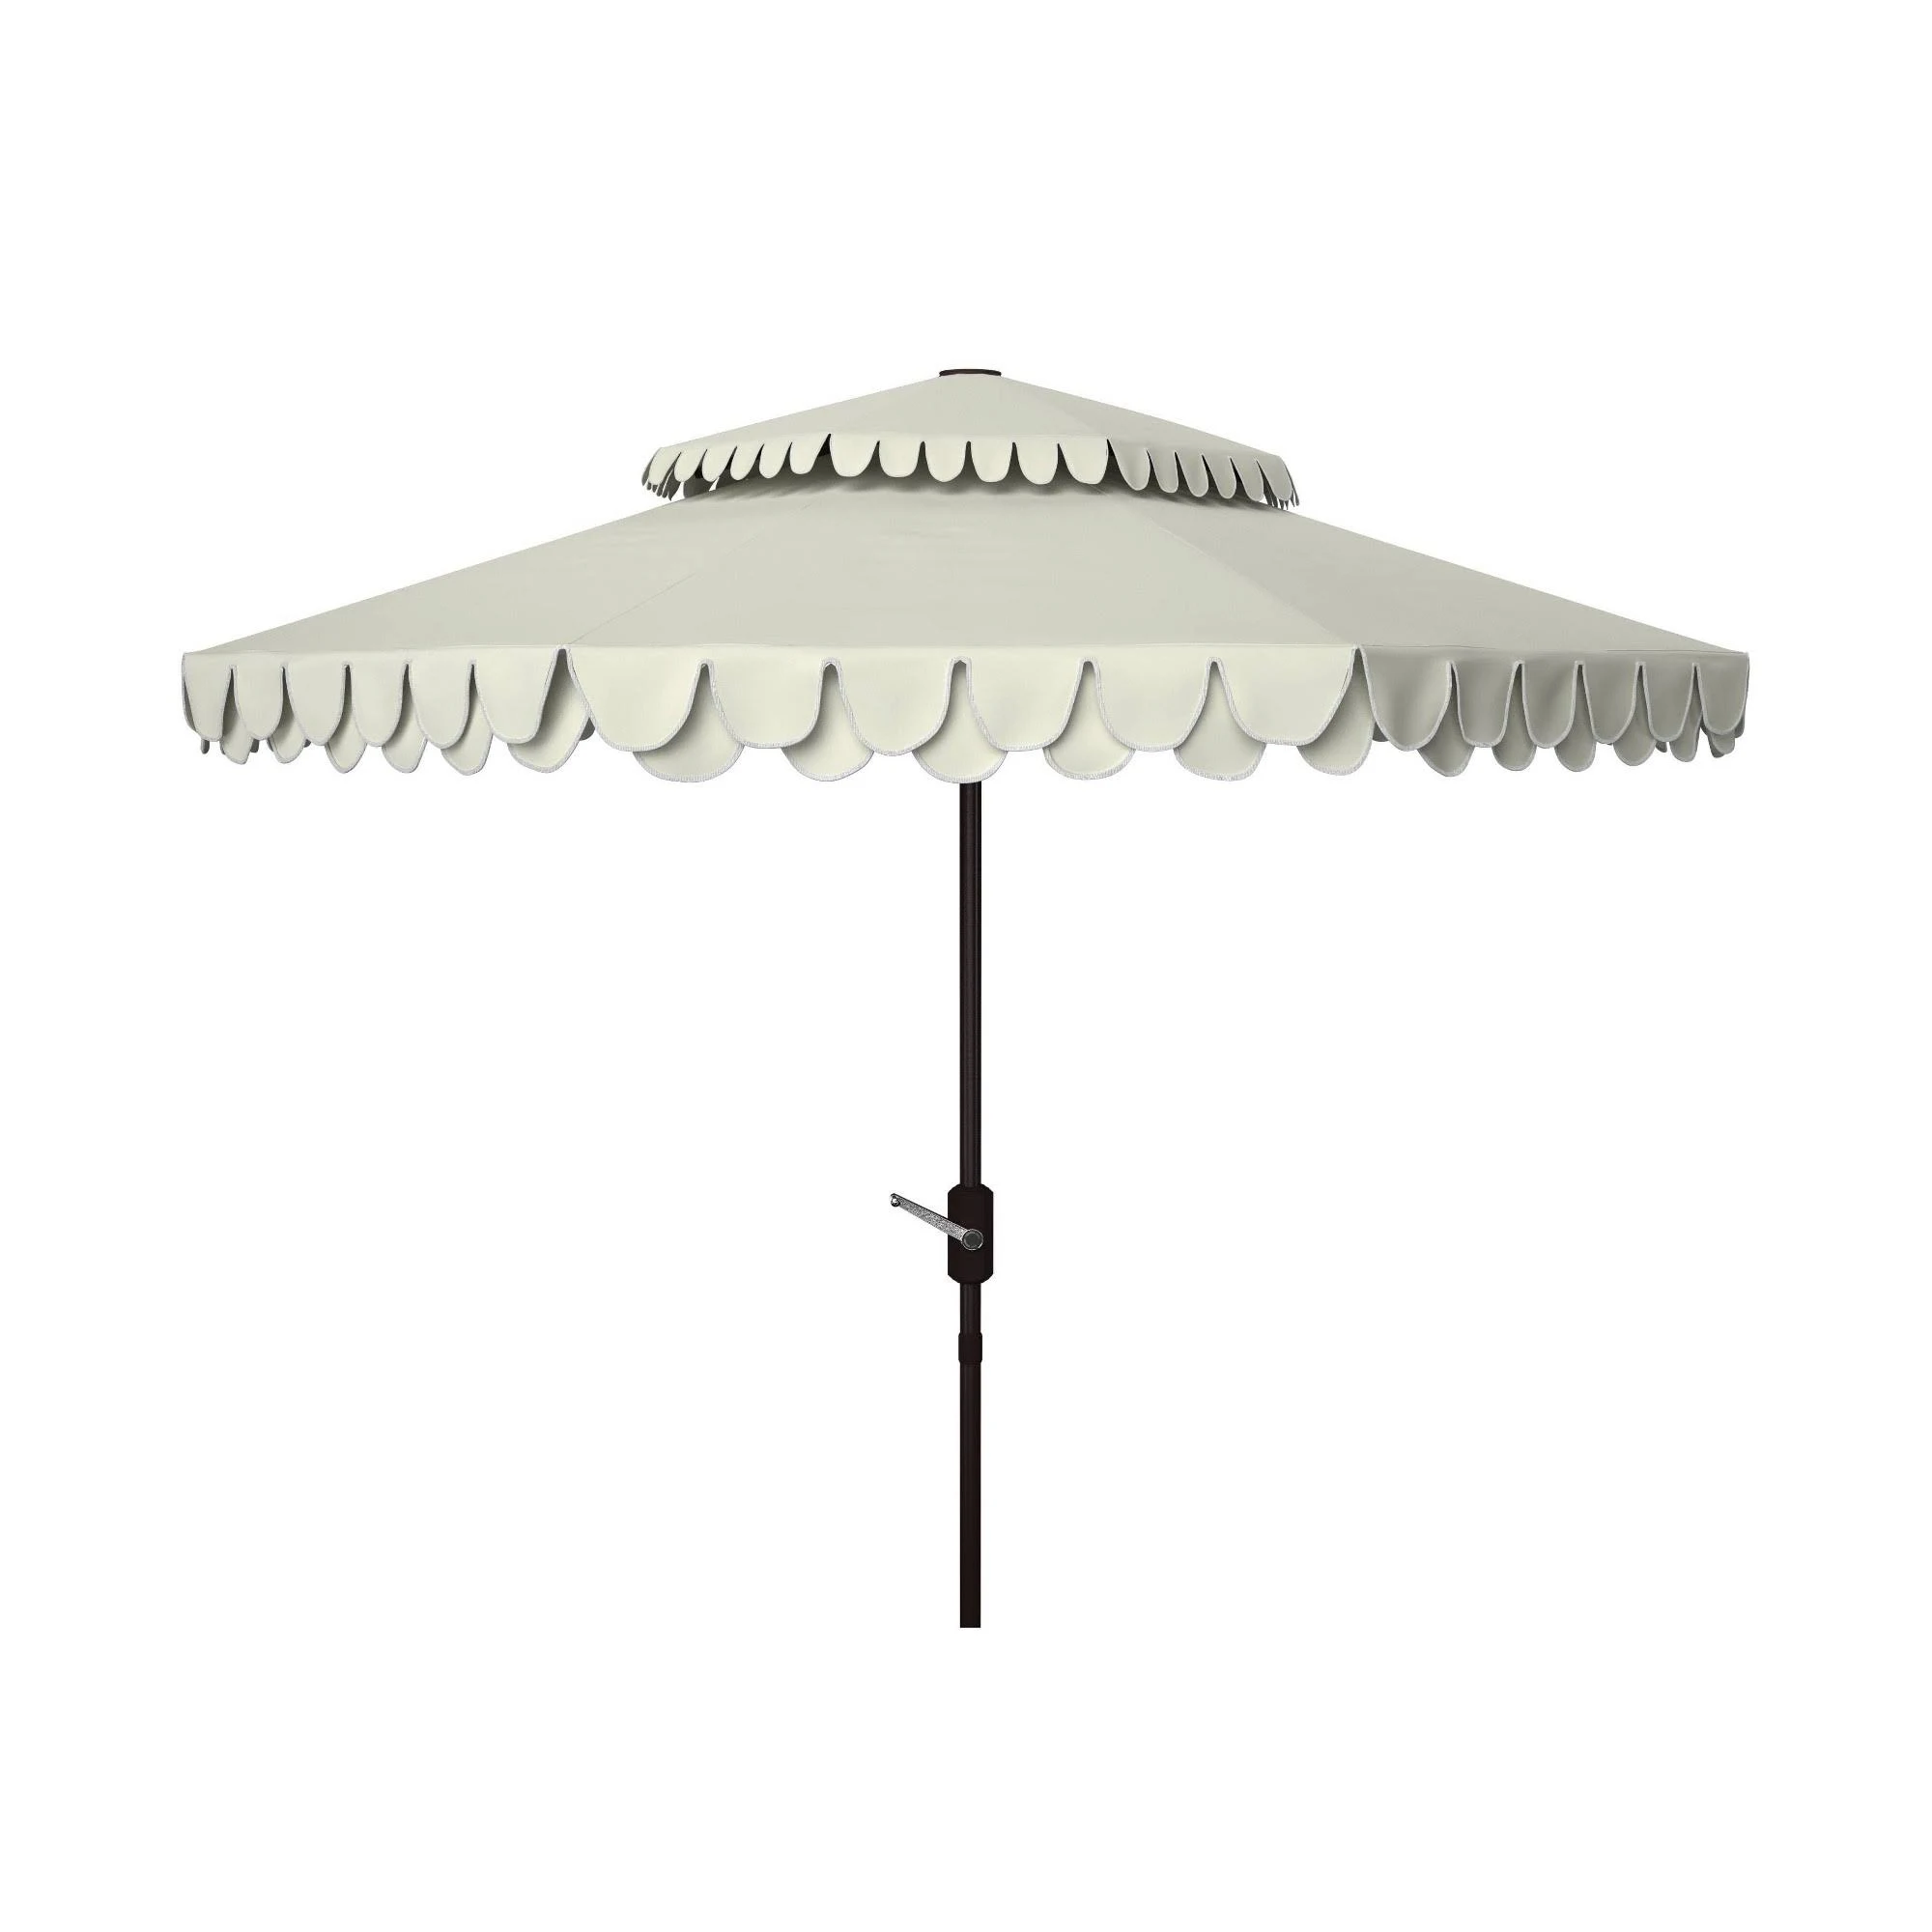 Safavieh Elegant Valance 9ft Double Top Umbrella  C Beige/White